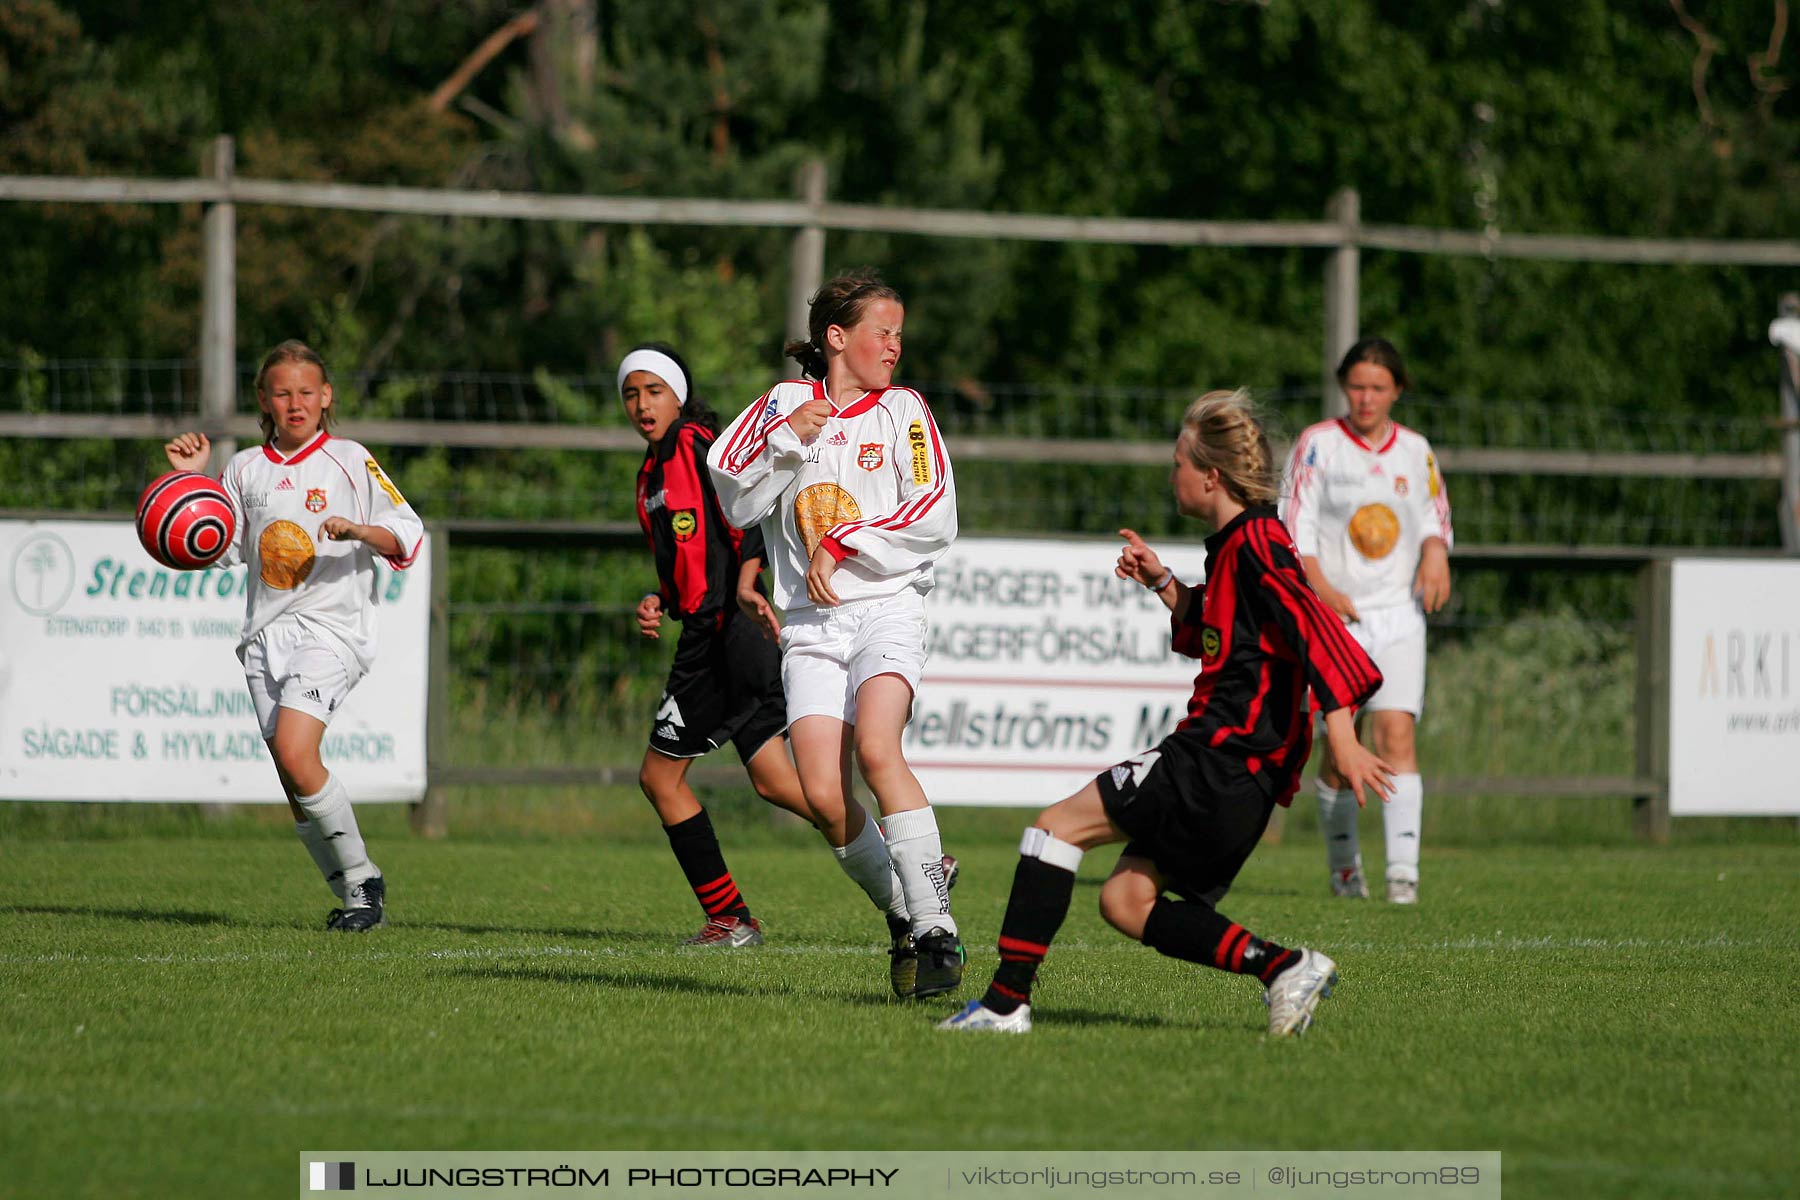 Ulvacupen 2006,mix,Åbrovallen,Ulvåker,Sverige,Fotboll,,2006,147383